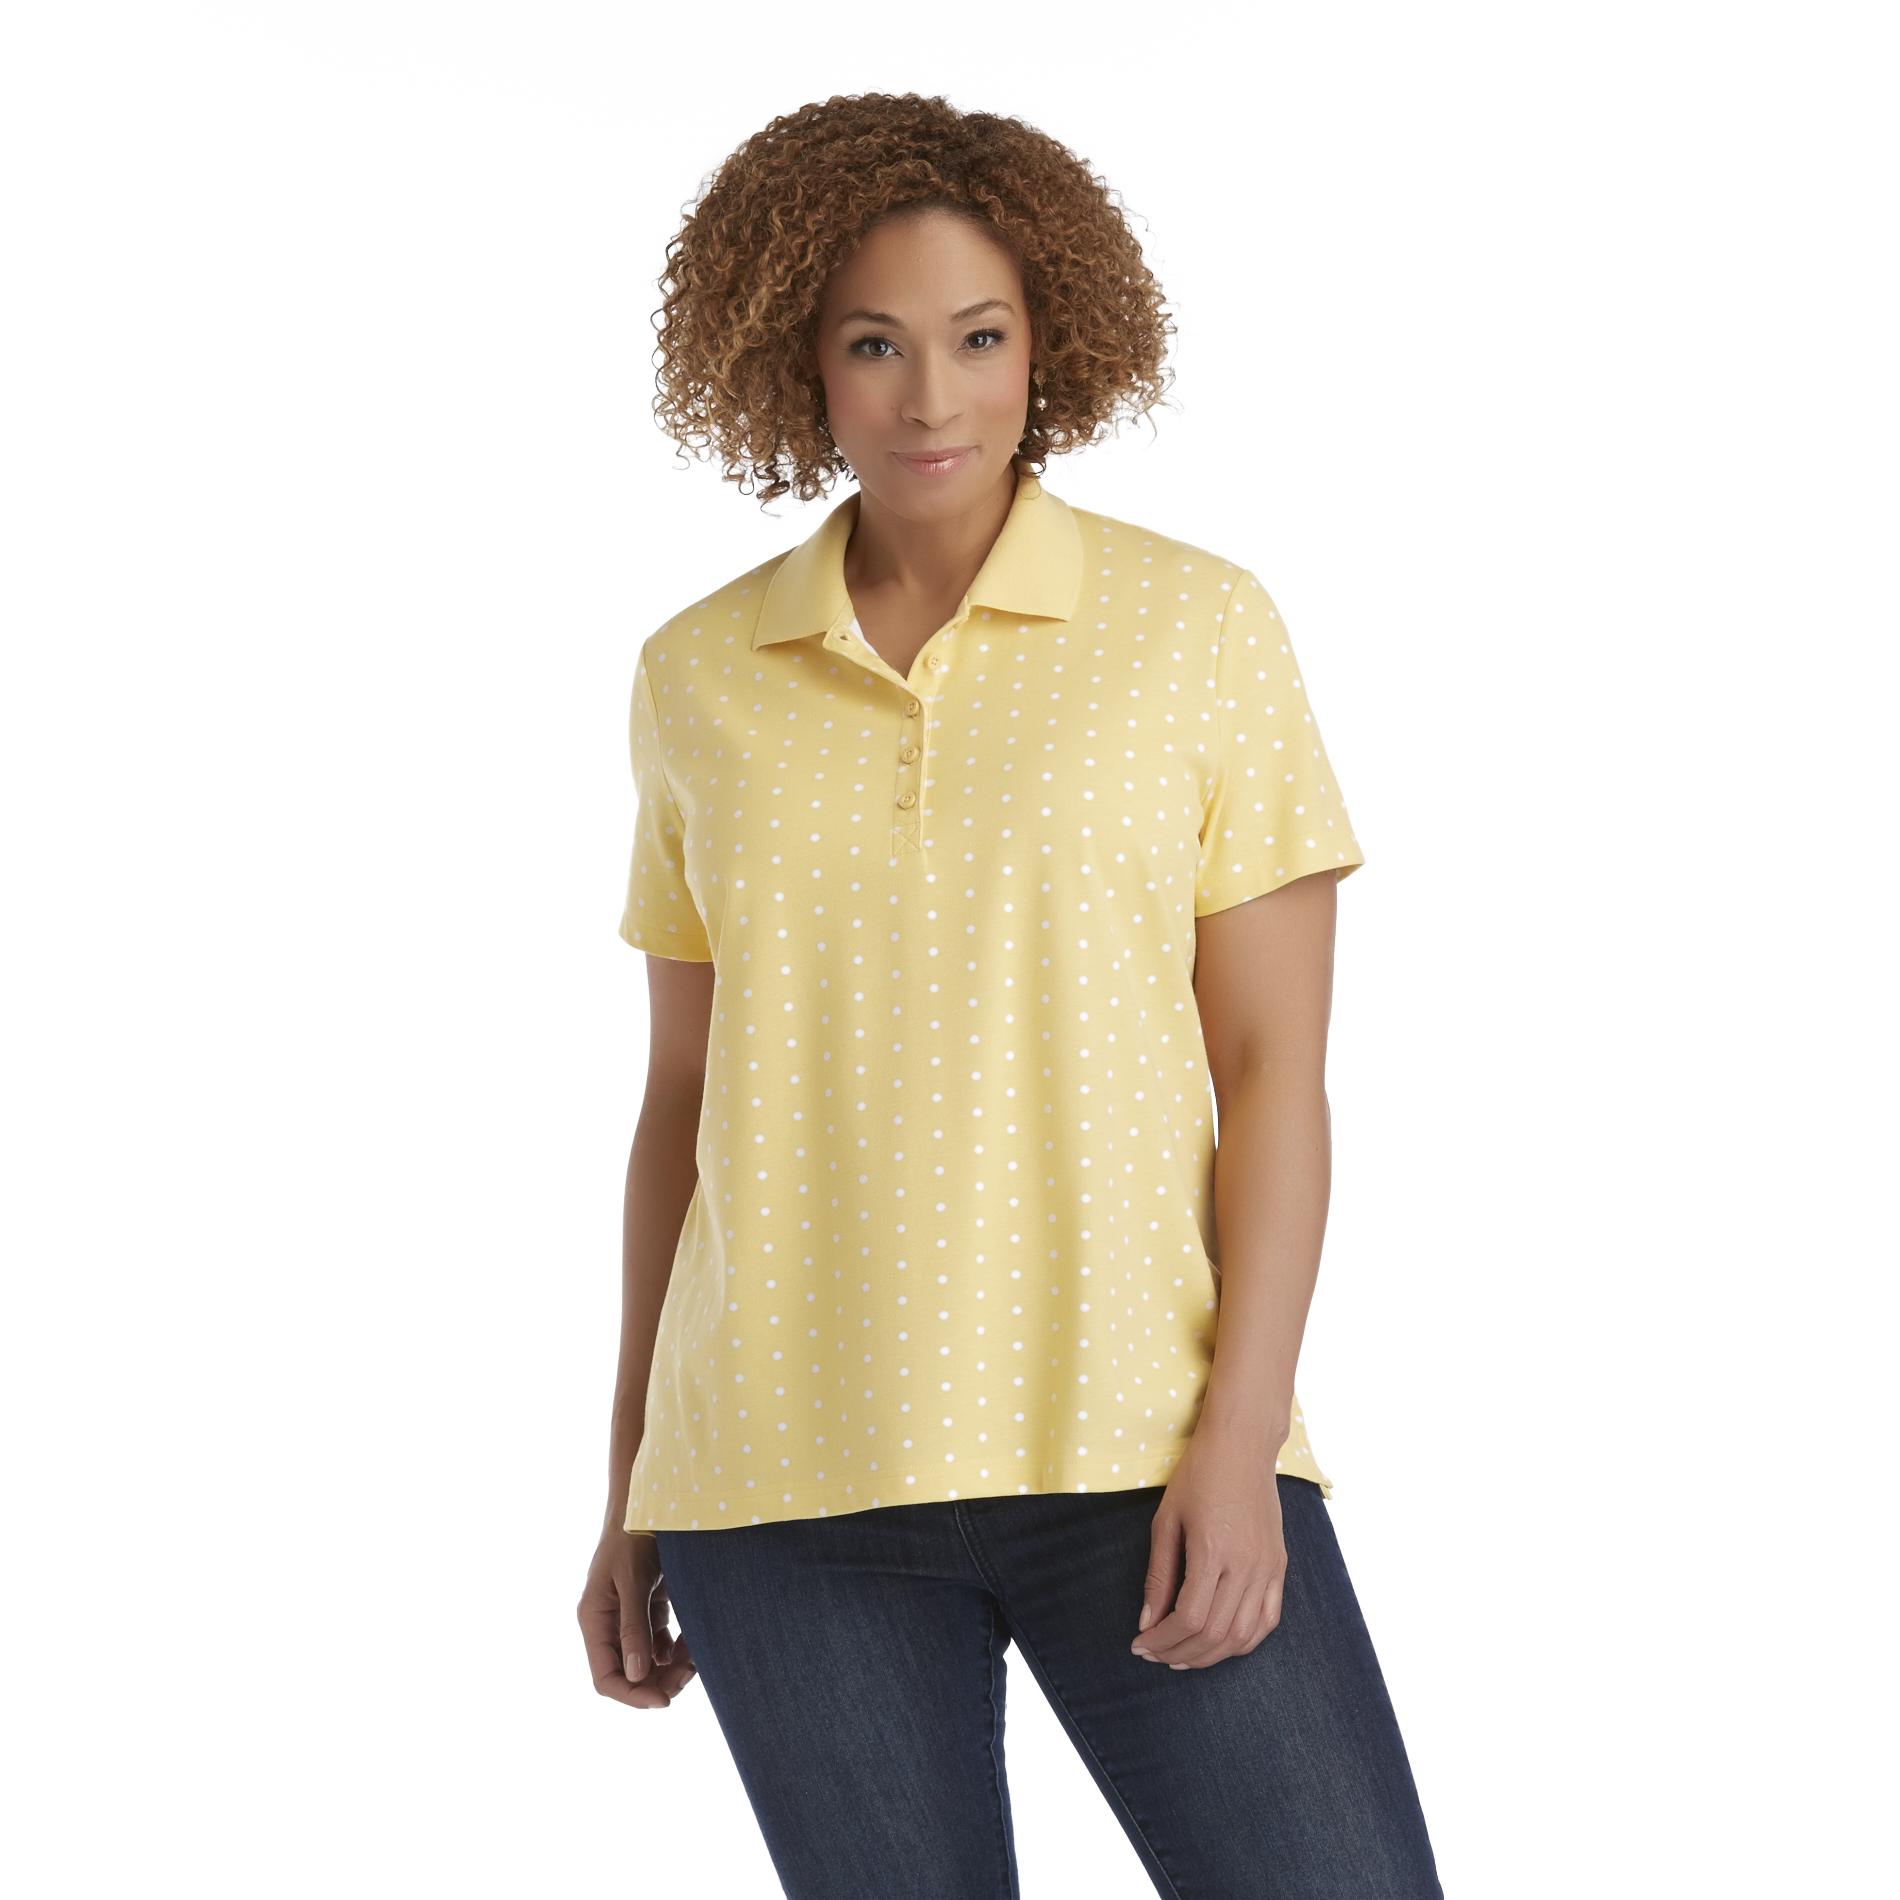 Basic Editions Women's Plus Pique Polo Shirt - Polka Dot